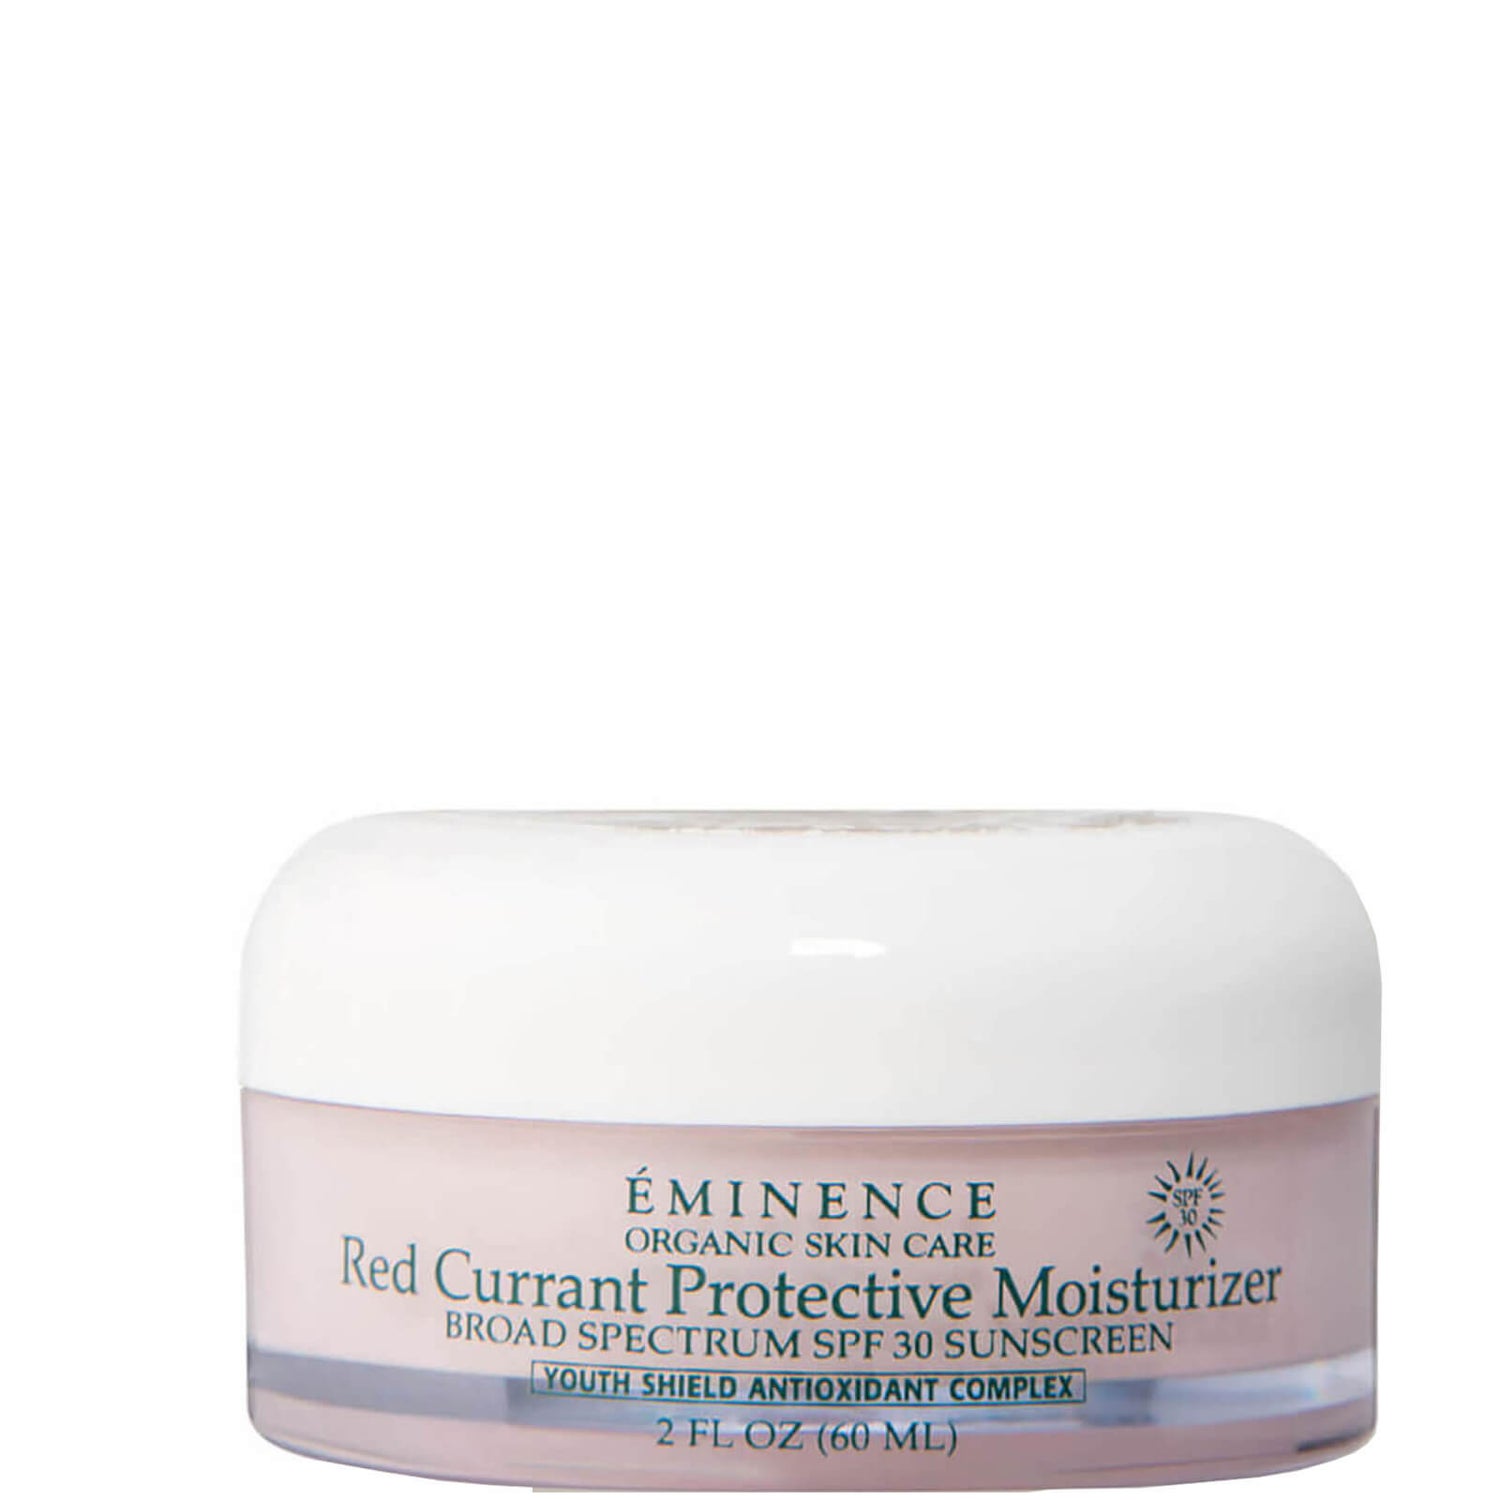 Eminence Organic Skin Care Red Currant Protective Moisturizer SPF 30 2 fl. oz